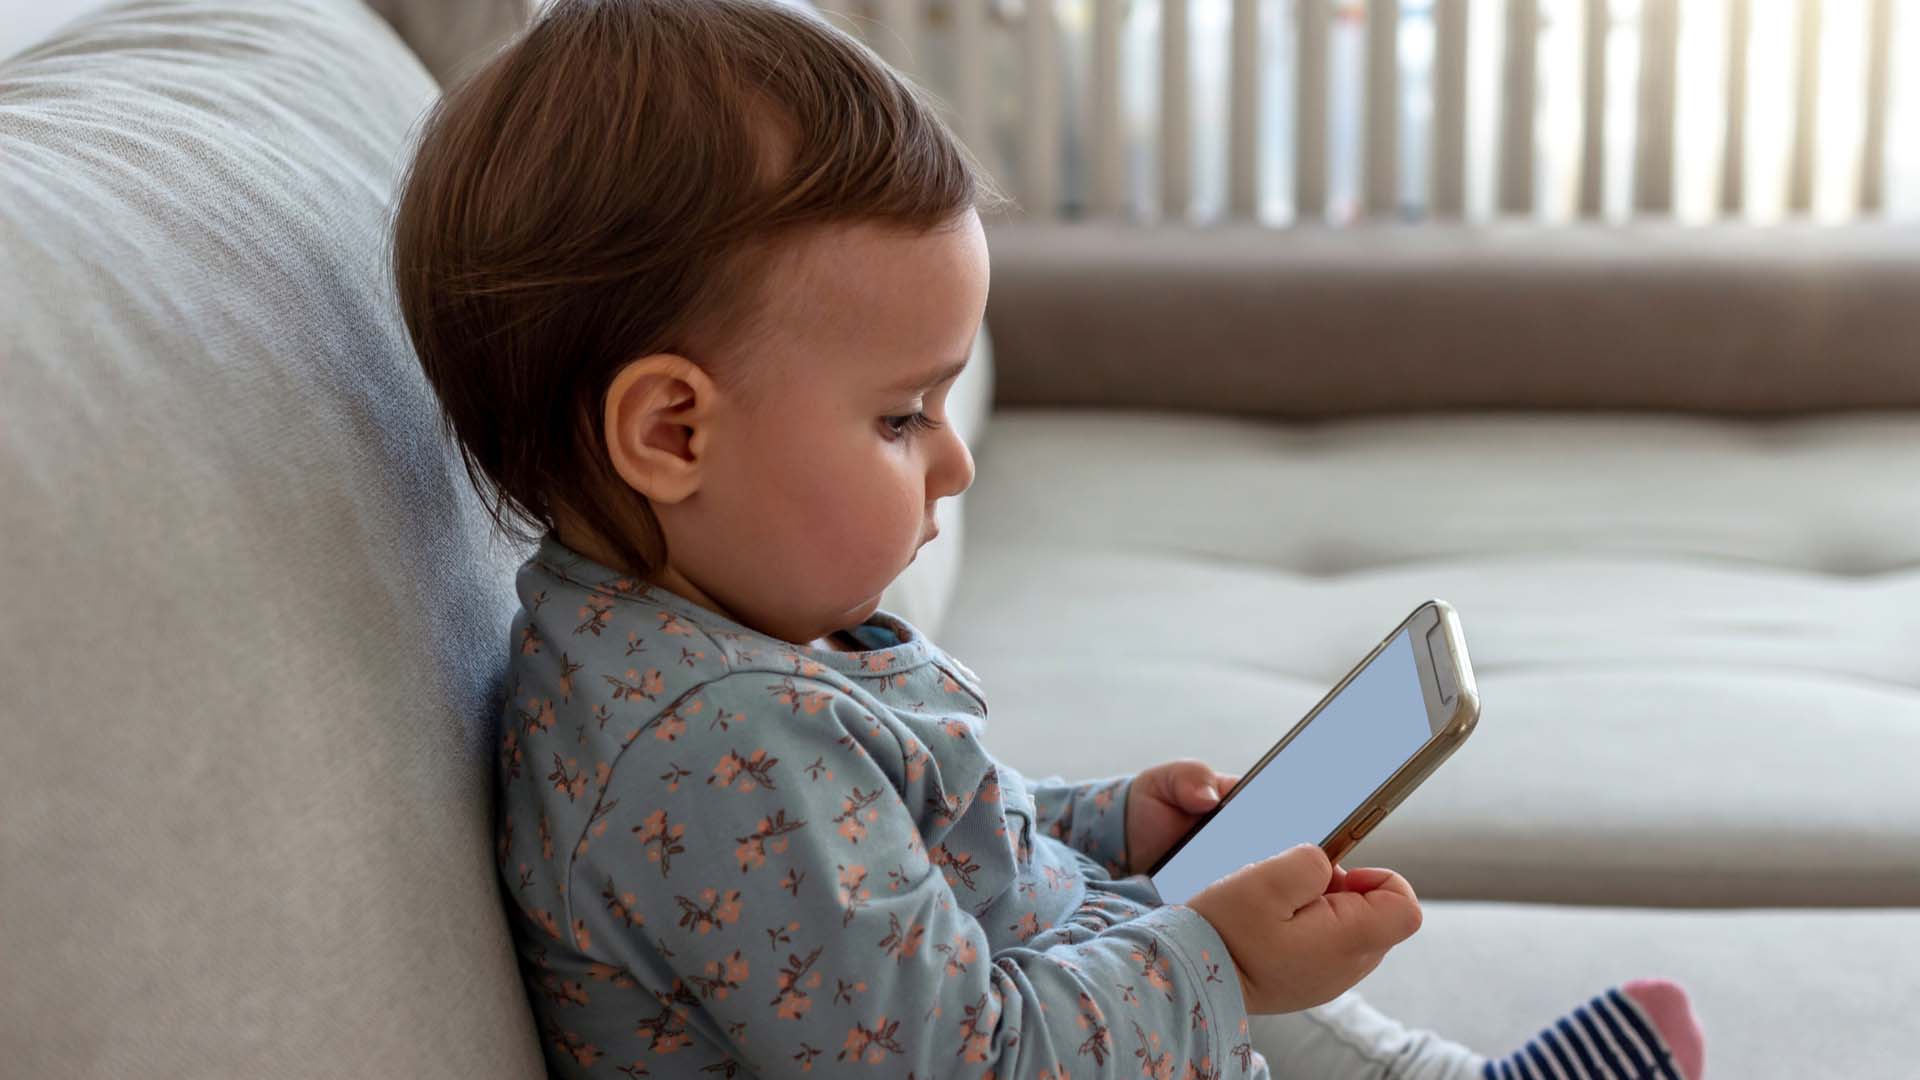 Cat ne lasam copiii la ecrane digitale?